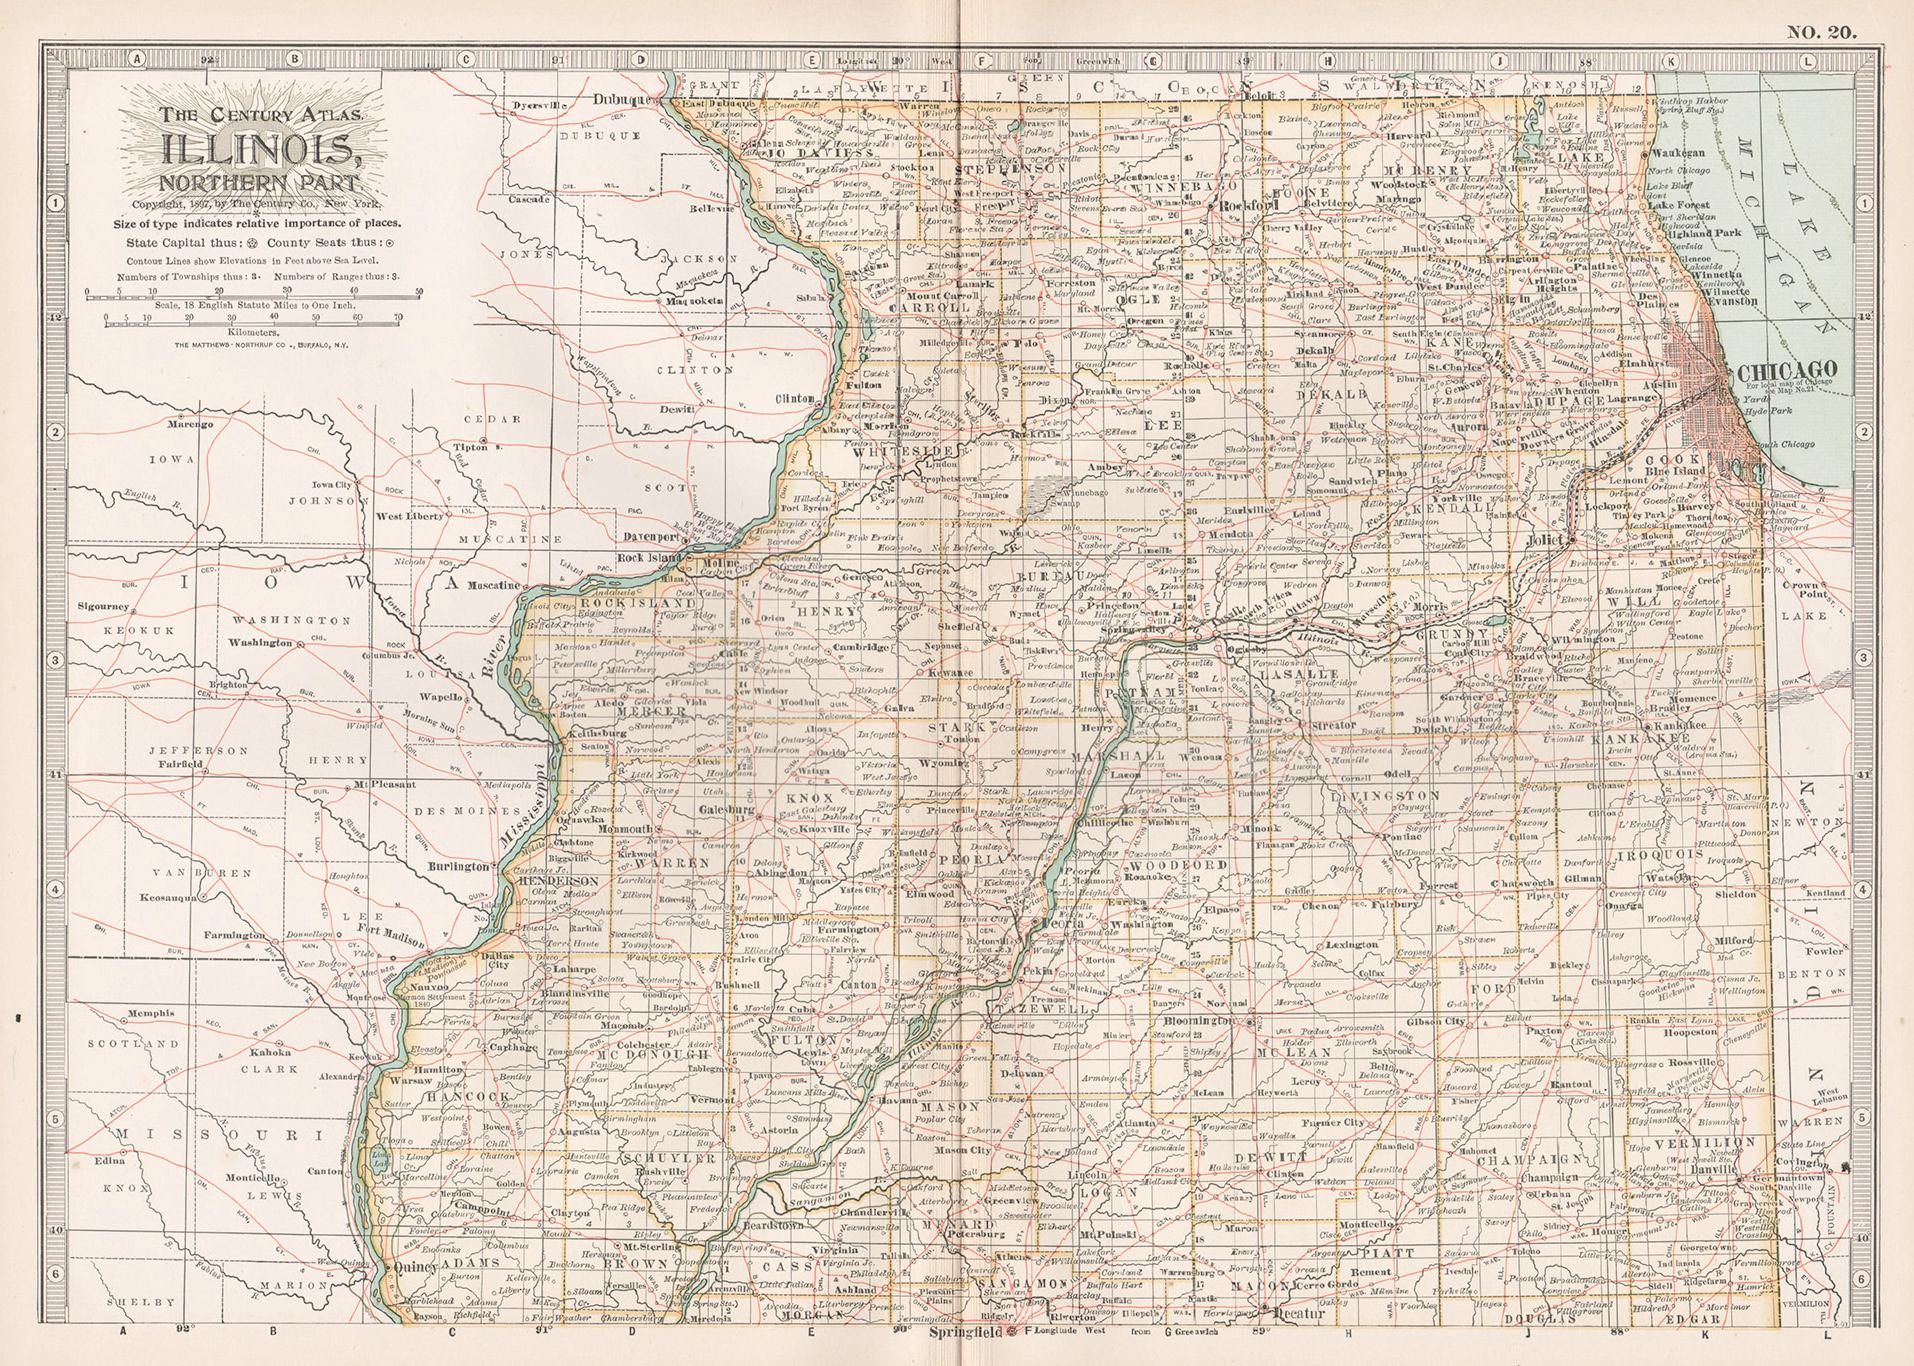 Unknown Print - Illinois, Northern Part. USA. Century Atlas state antique vintage map